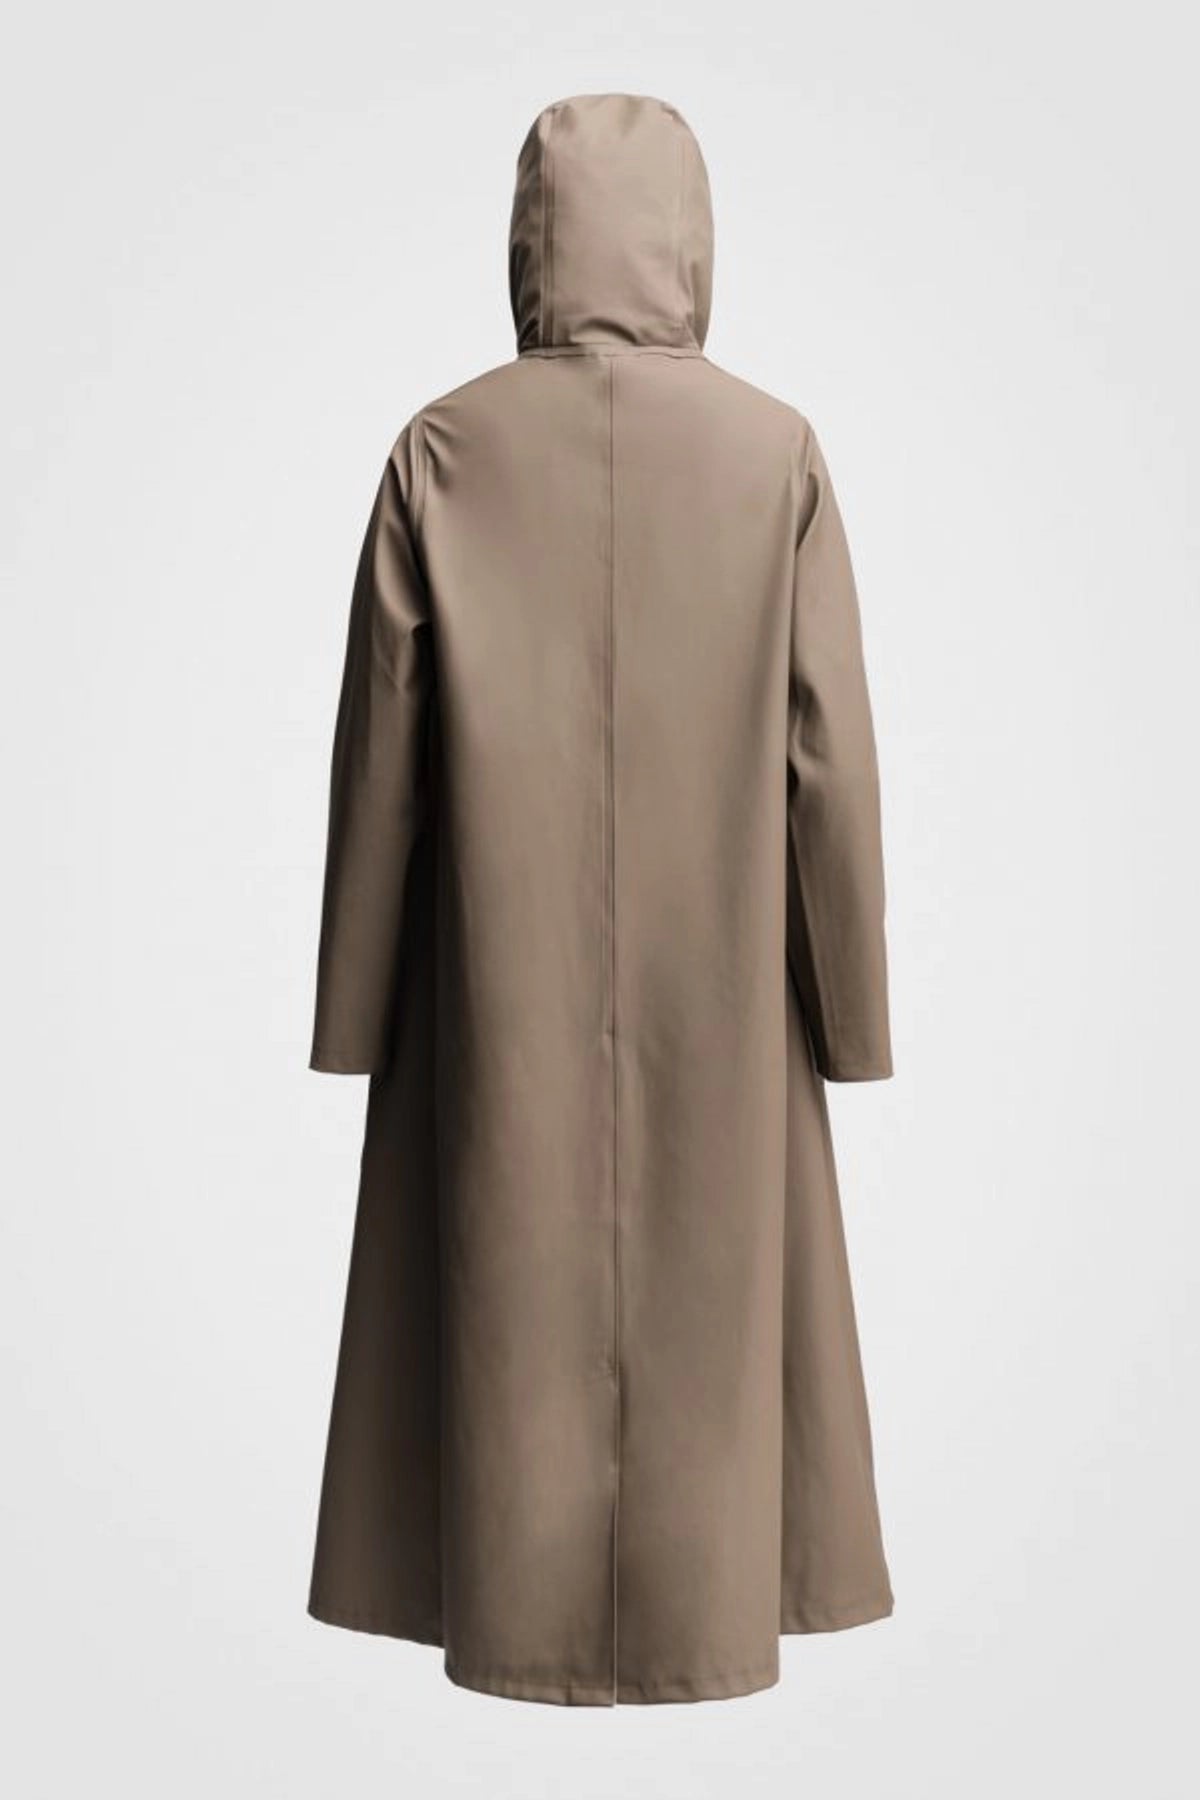 Stutterheim Mosebacke long raincoat mole brown flowing A-line women | PIPE AND ROW boutique